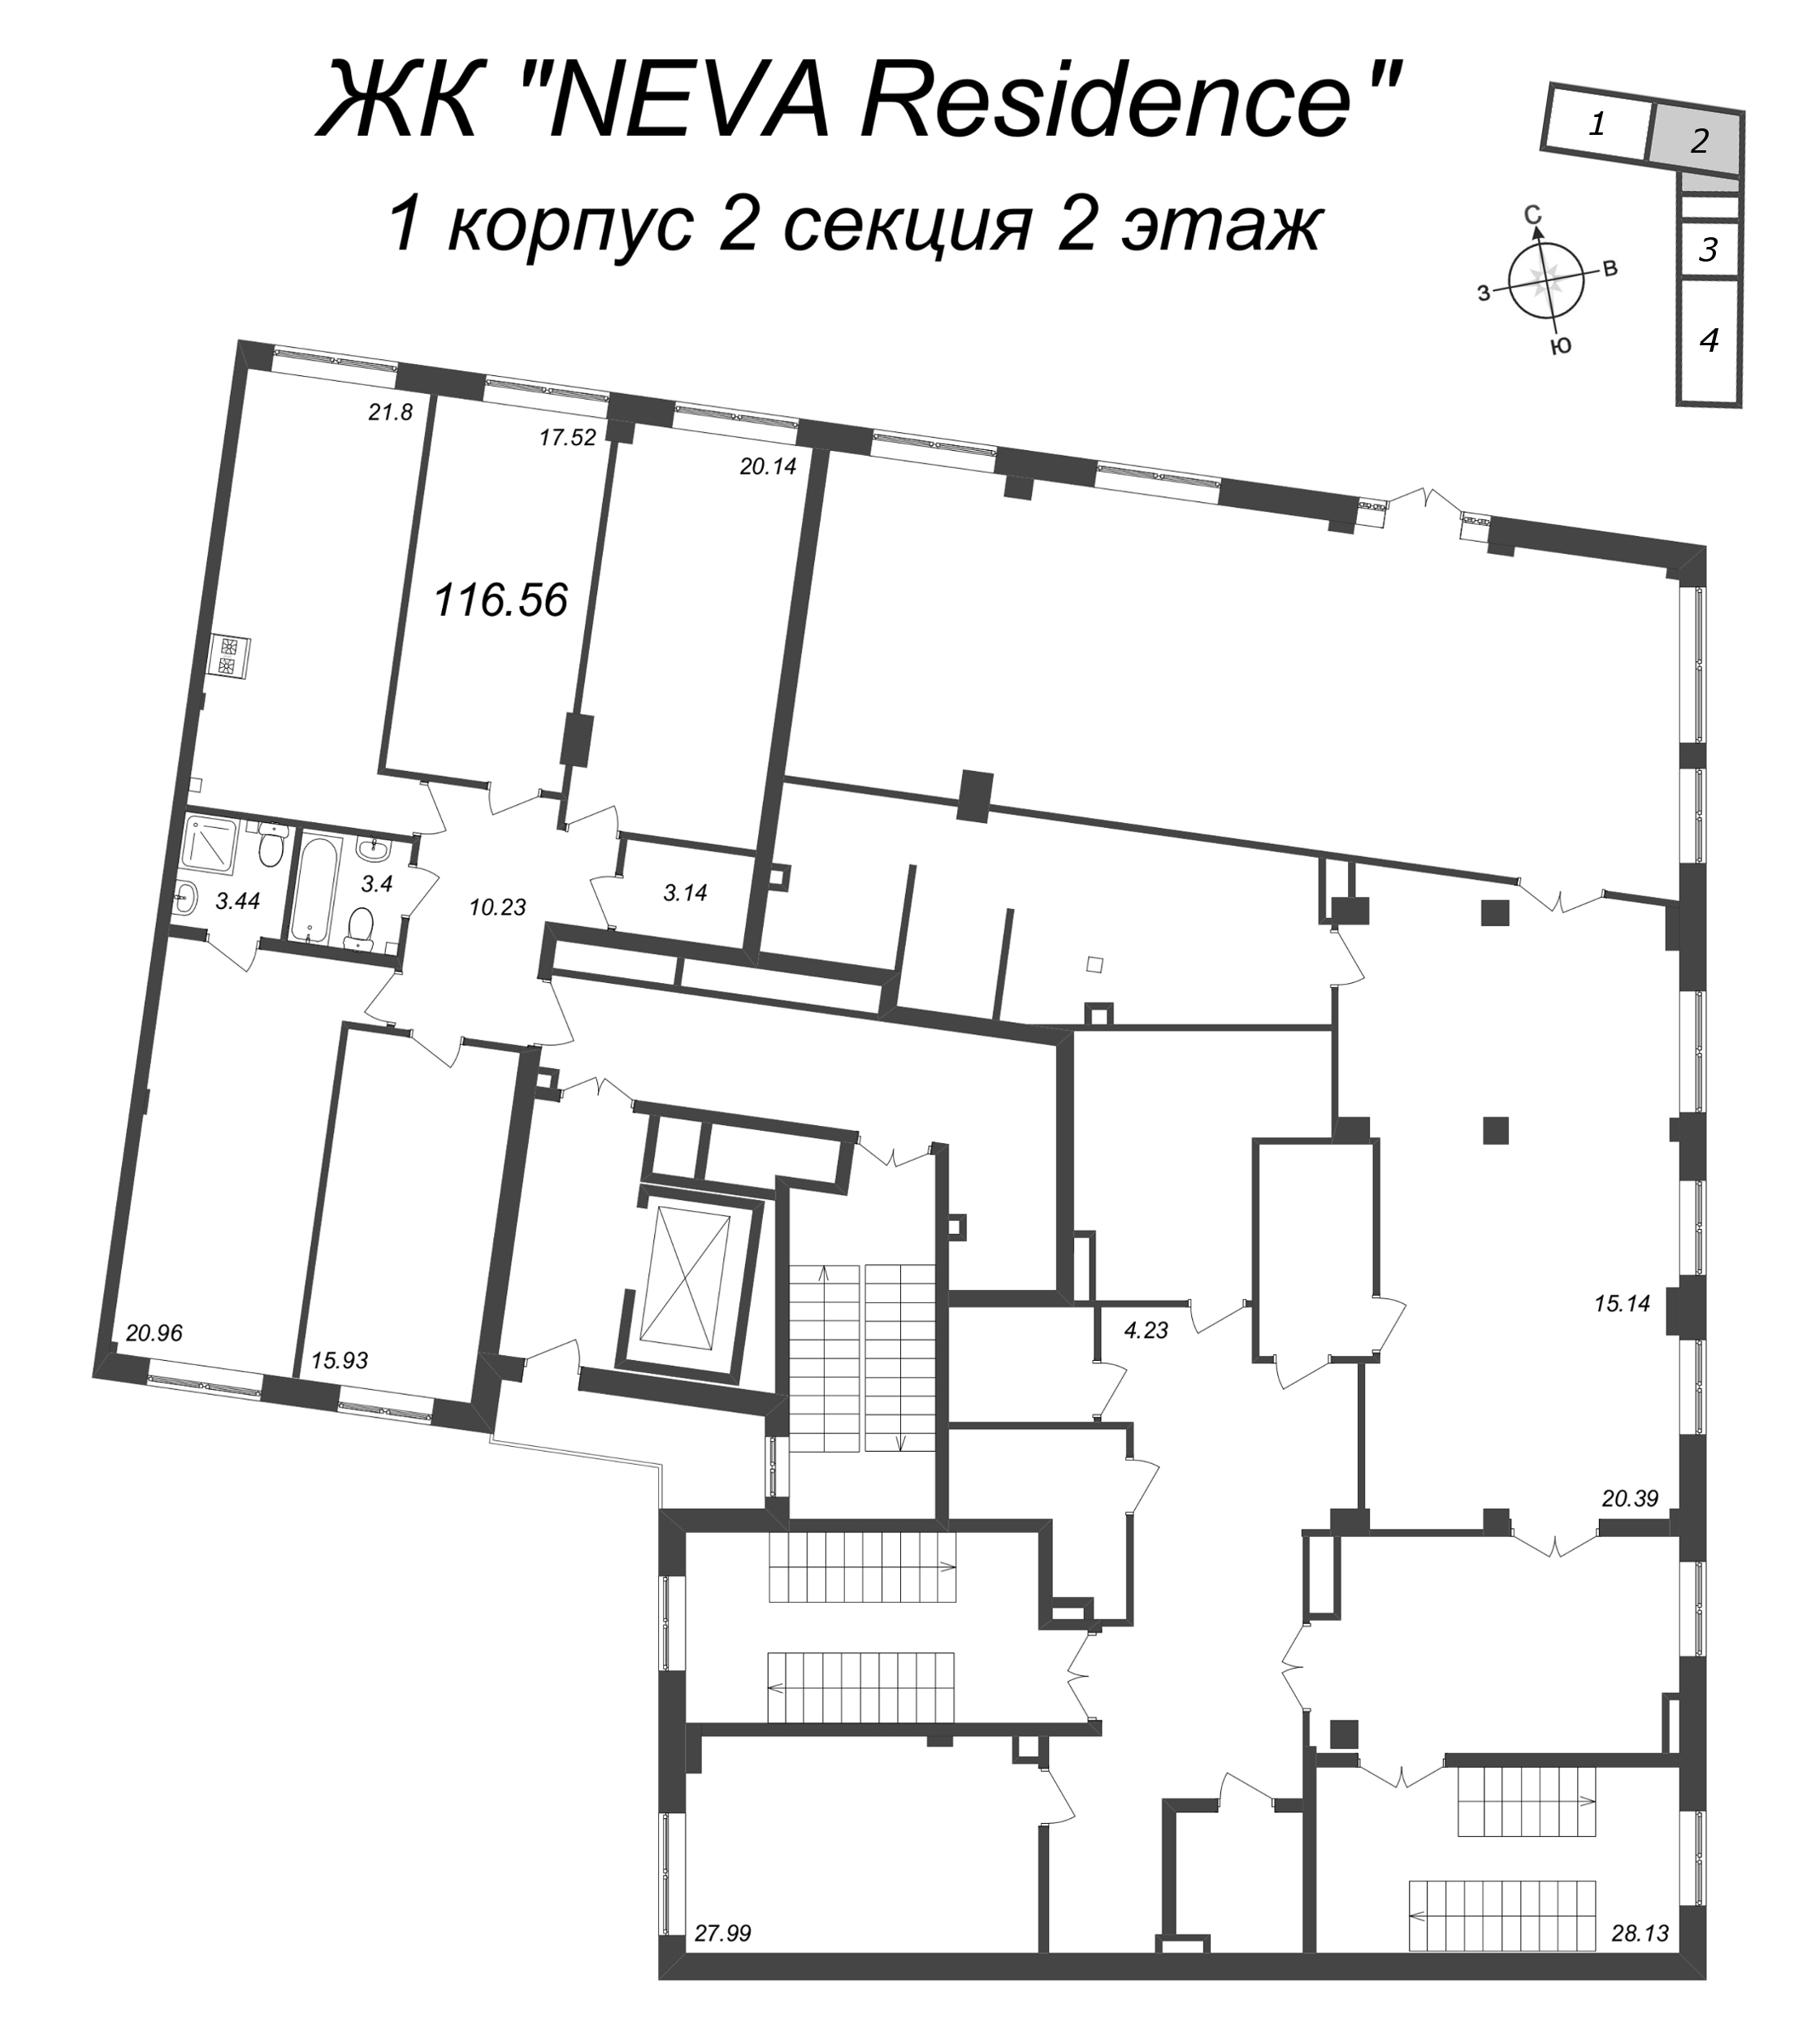 5-комнатная (Евро) квартира, 116.56 м² - планировка этажа